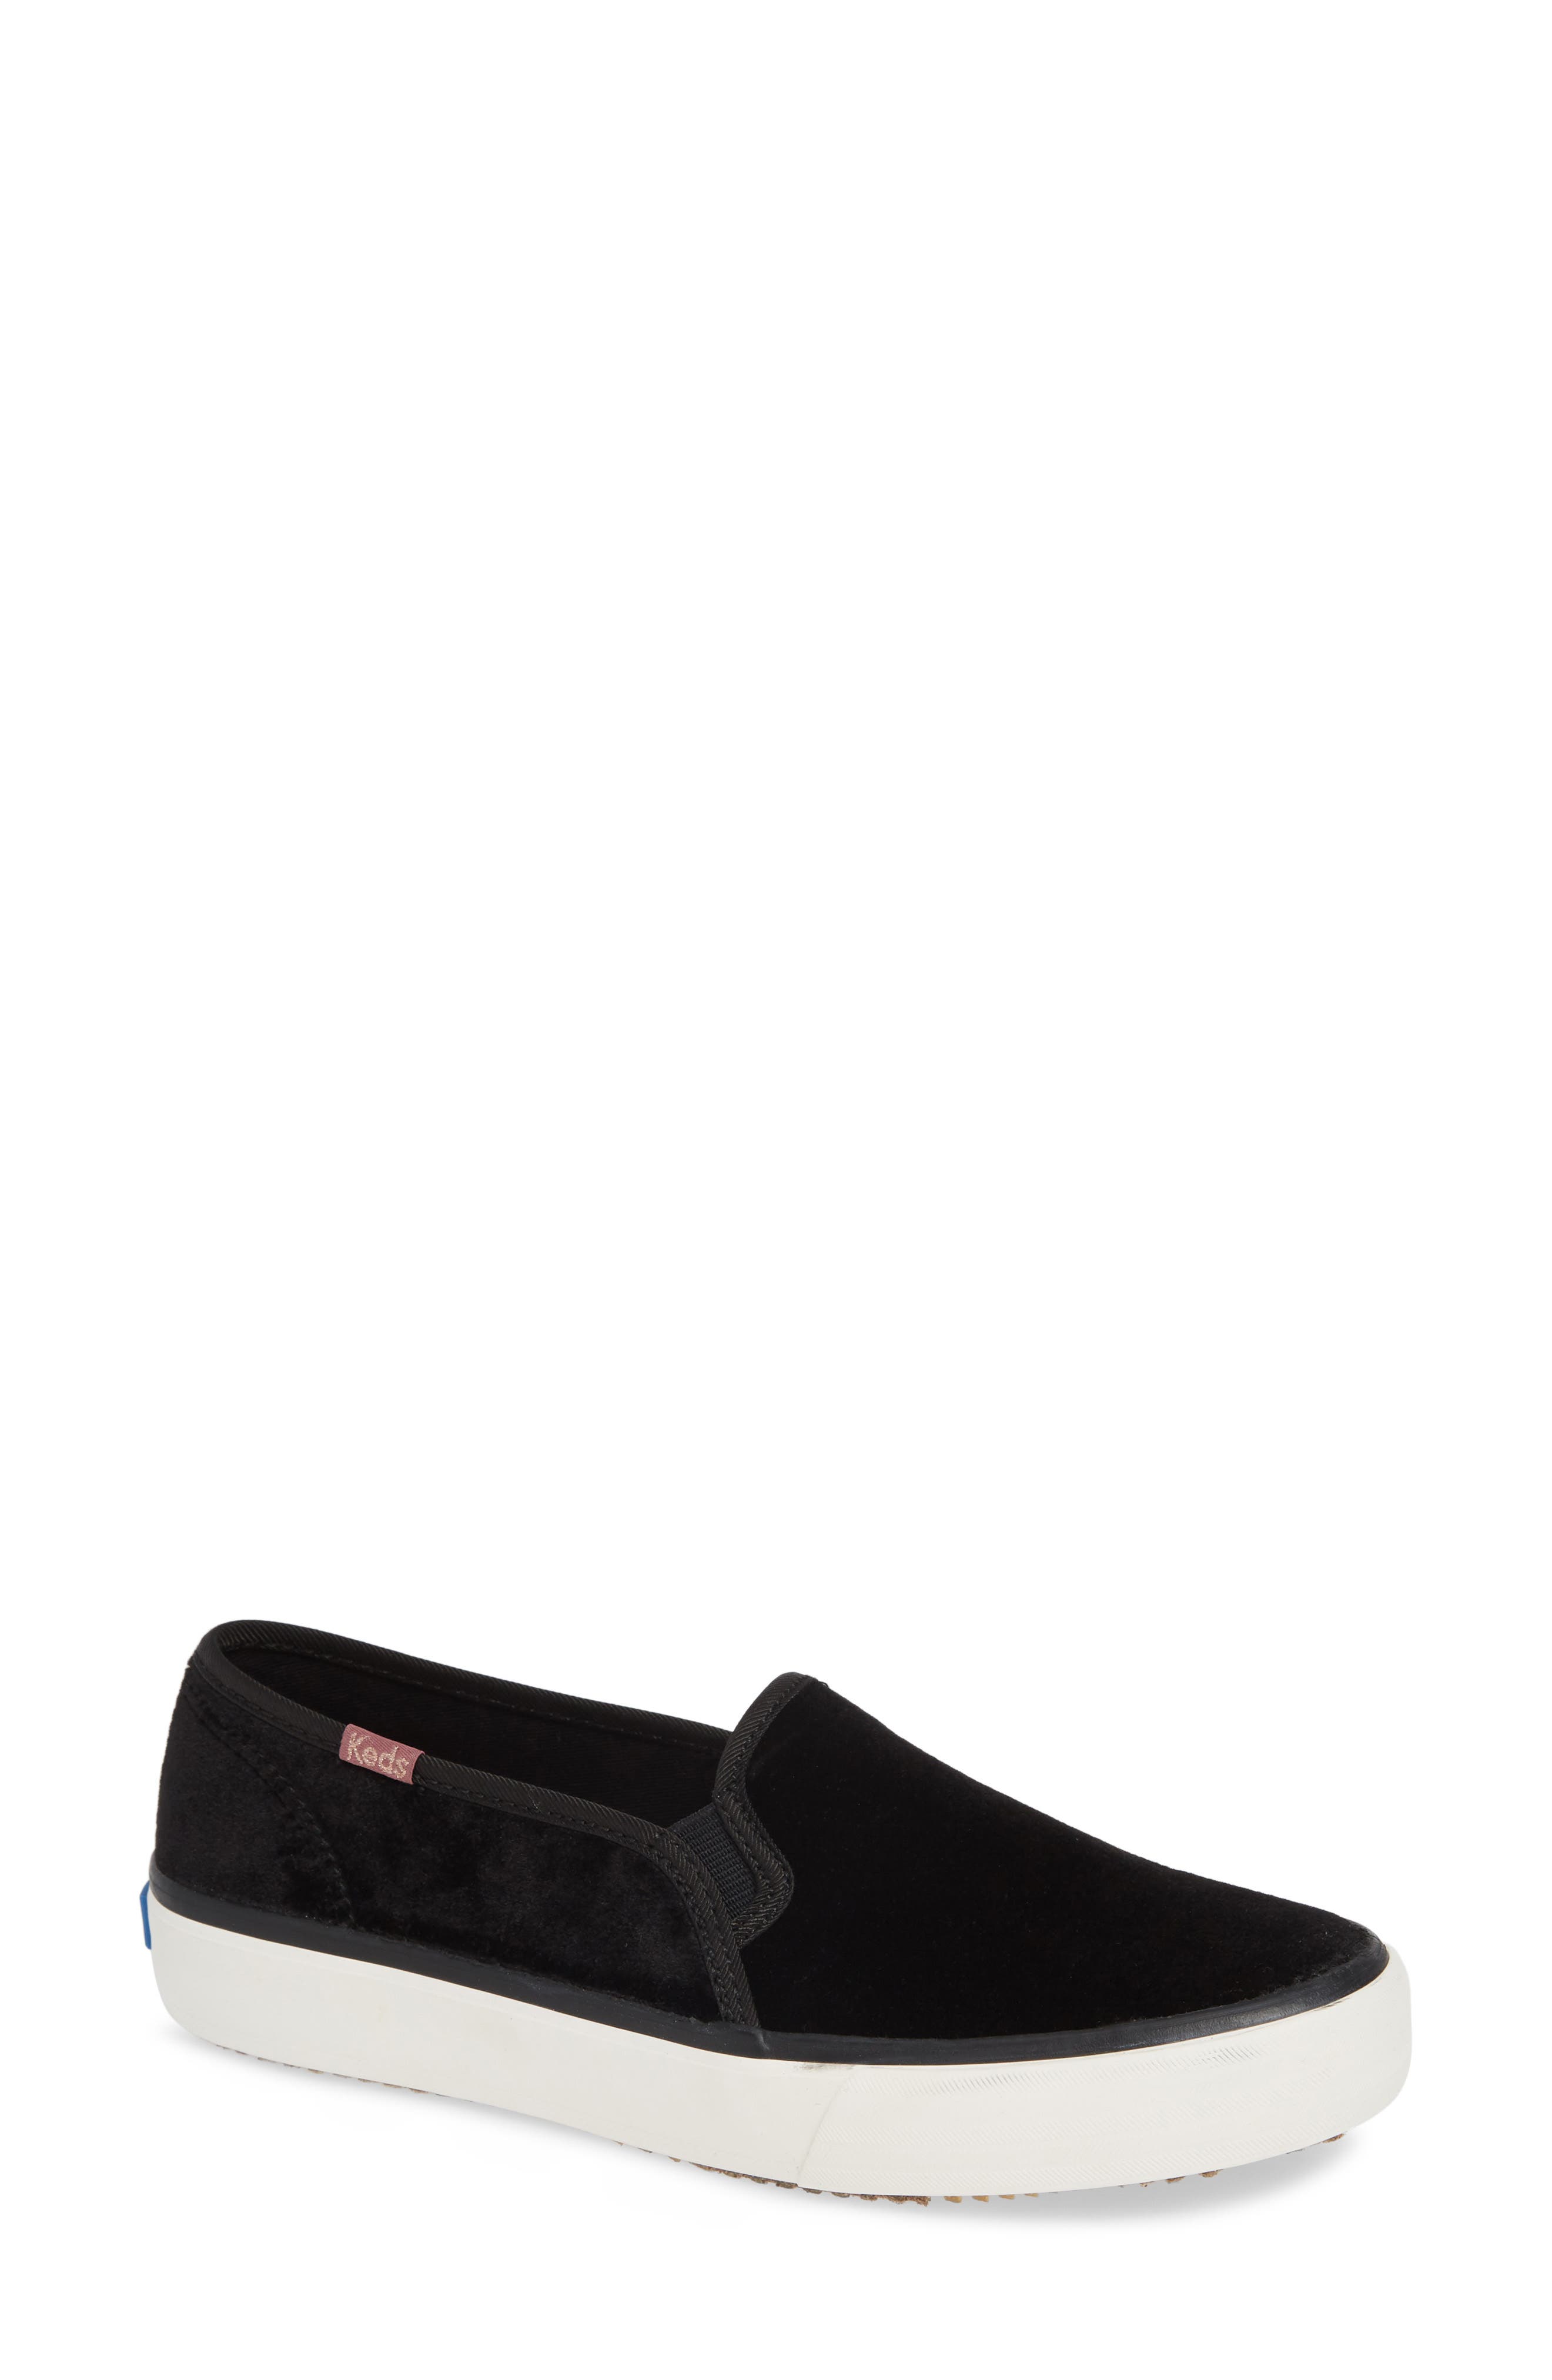 UPC 884547671639 product image for Women's Keds 'Double Decker' Slip-On Sneaker, Size 6 M - Black | upcitemdb.com